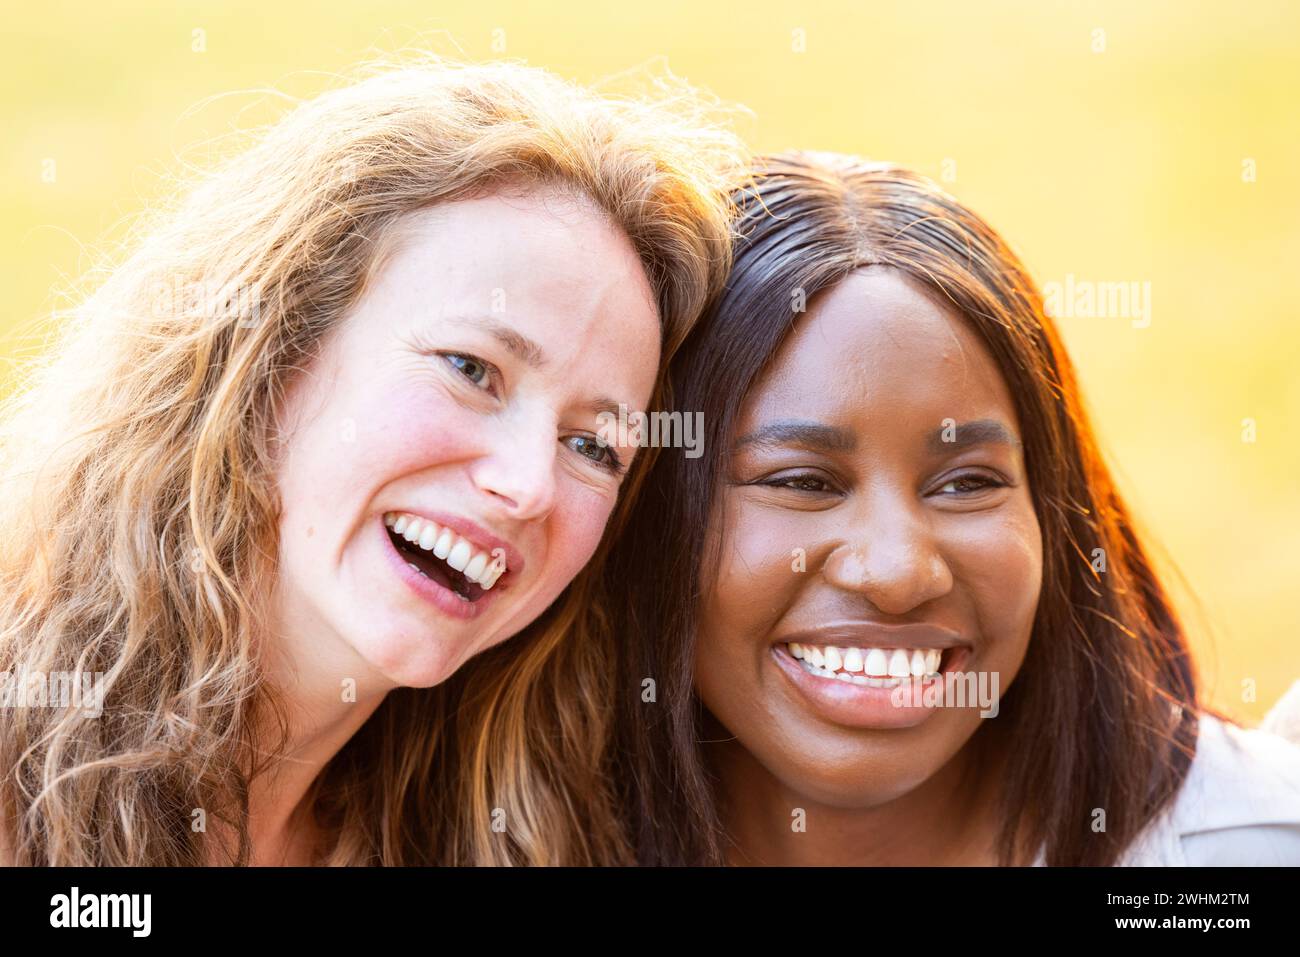 Sisterly Bond: Smiling Portrait of Multi-Ethnic Female Friends Stock Photo